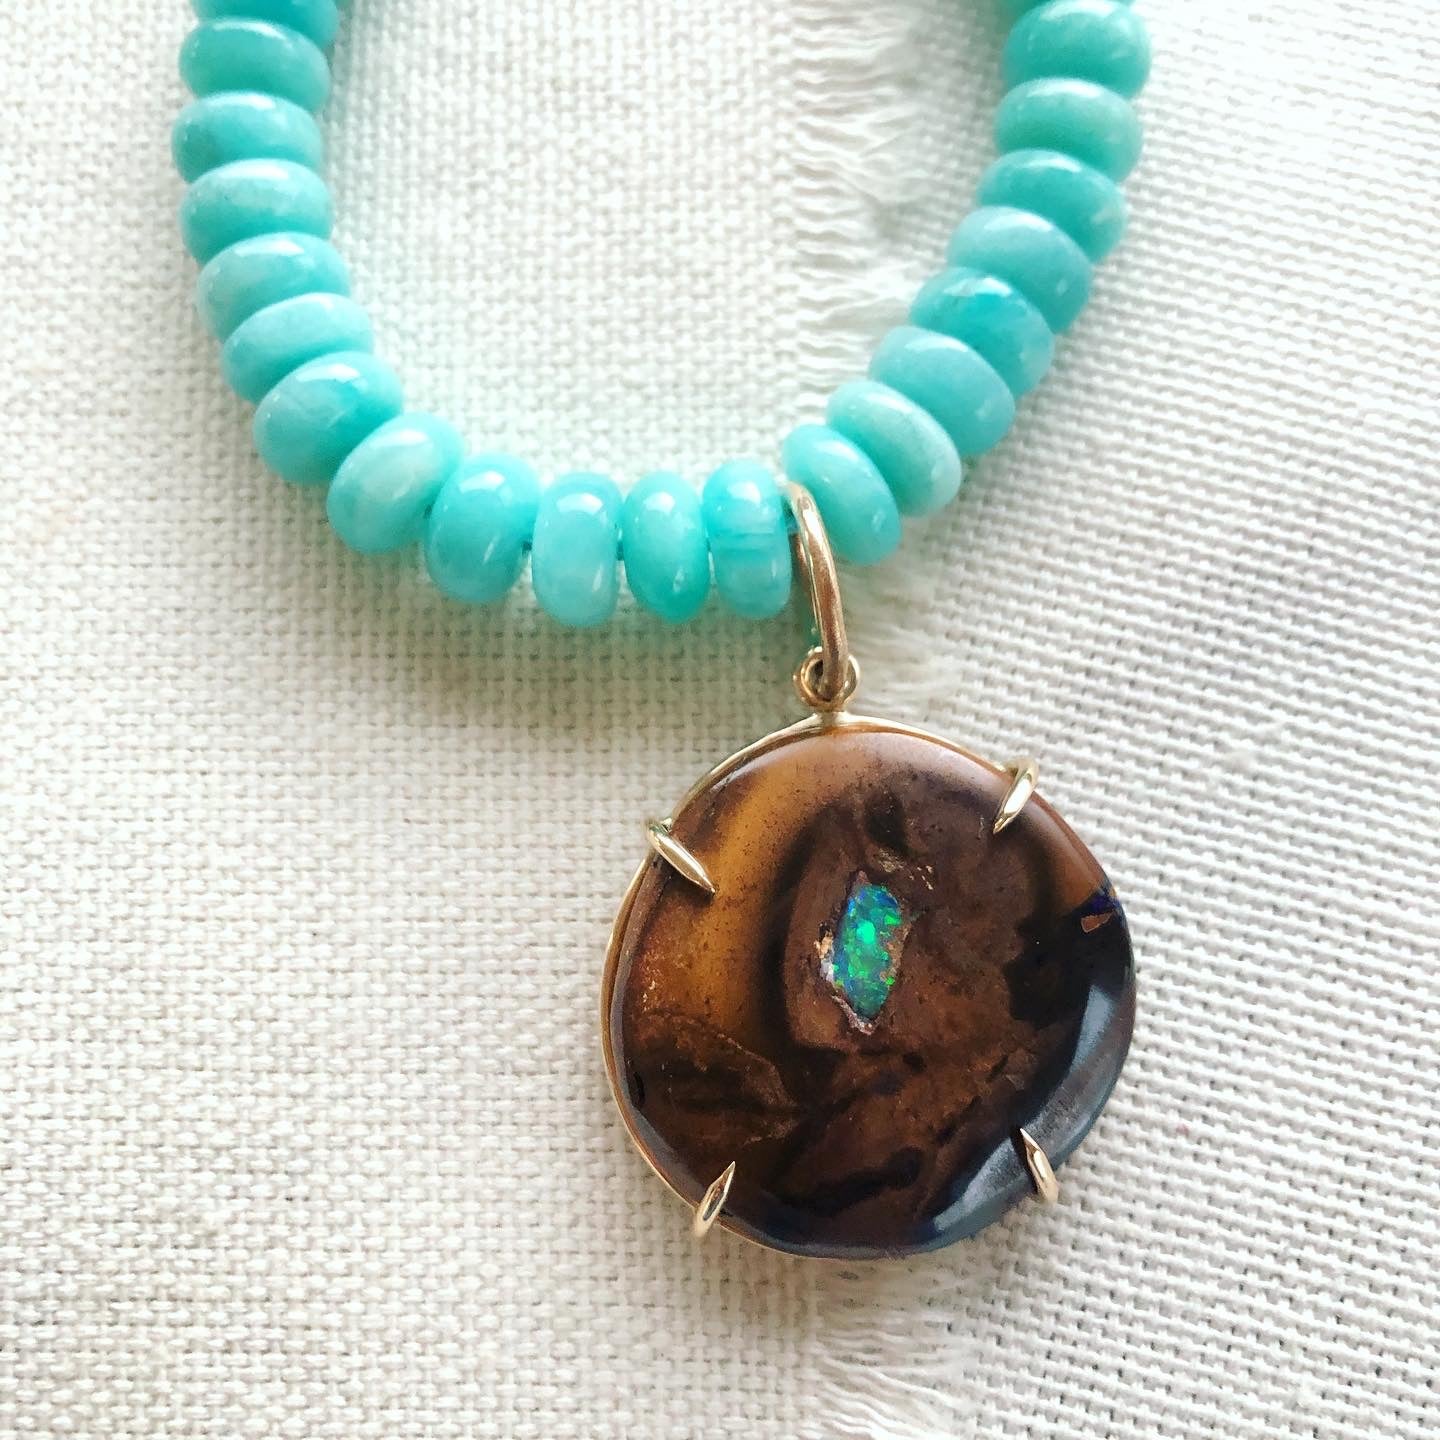 Australian Yowah Nut Opal Pendant on Amazonite Necklace